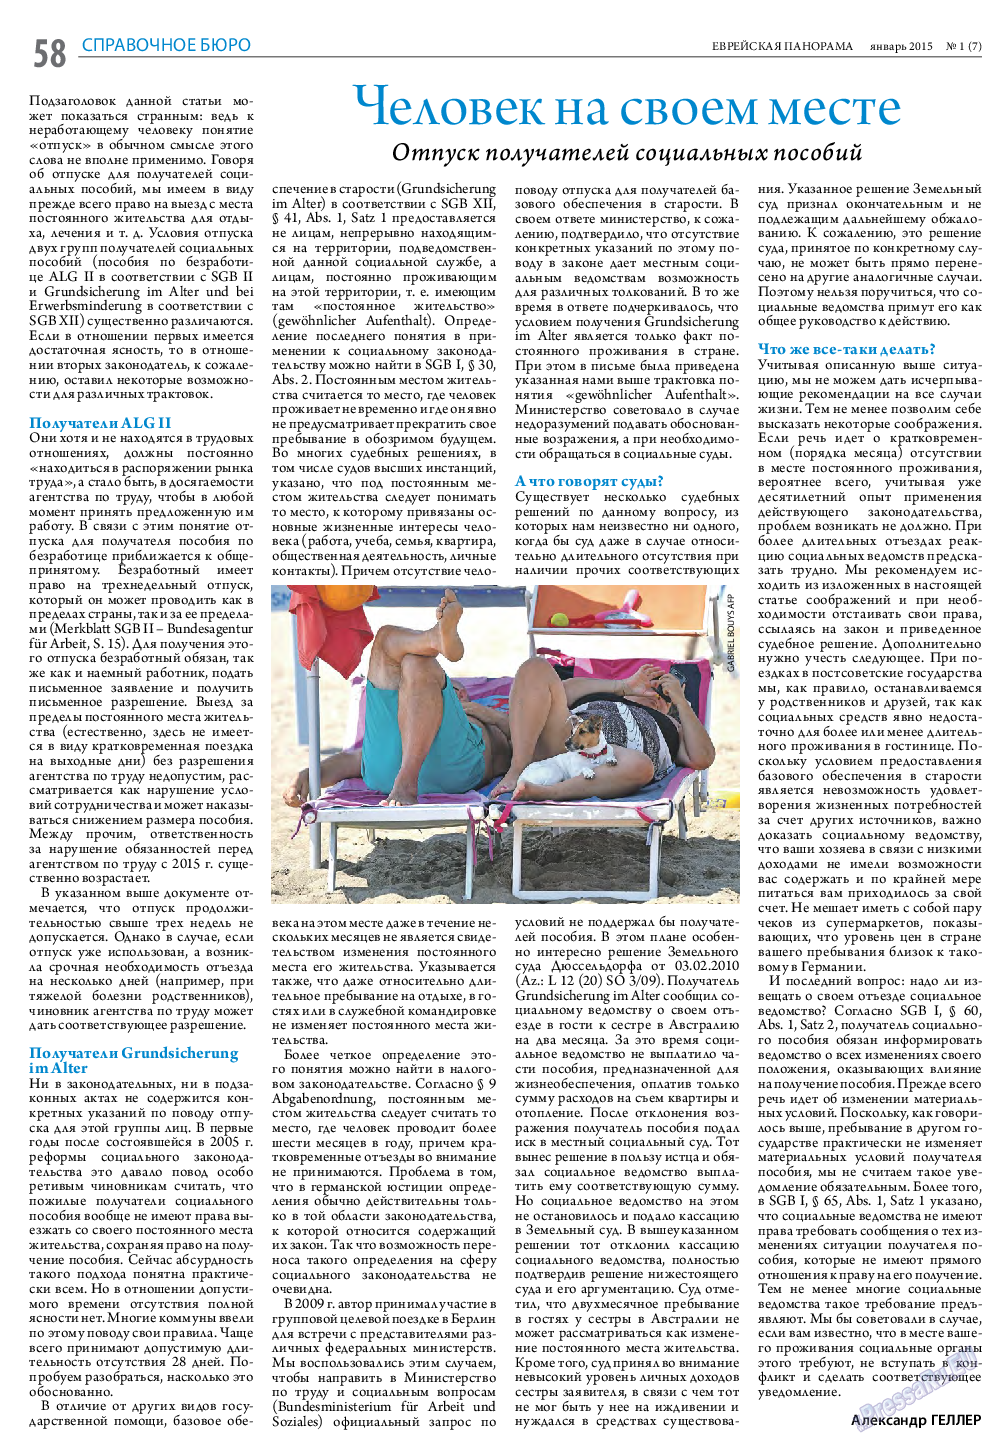 Еврейская панорама, газета. 2015 №1 стр.58